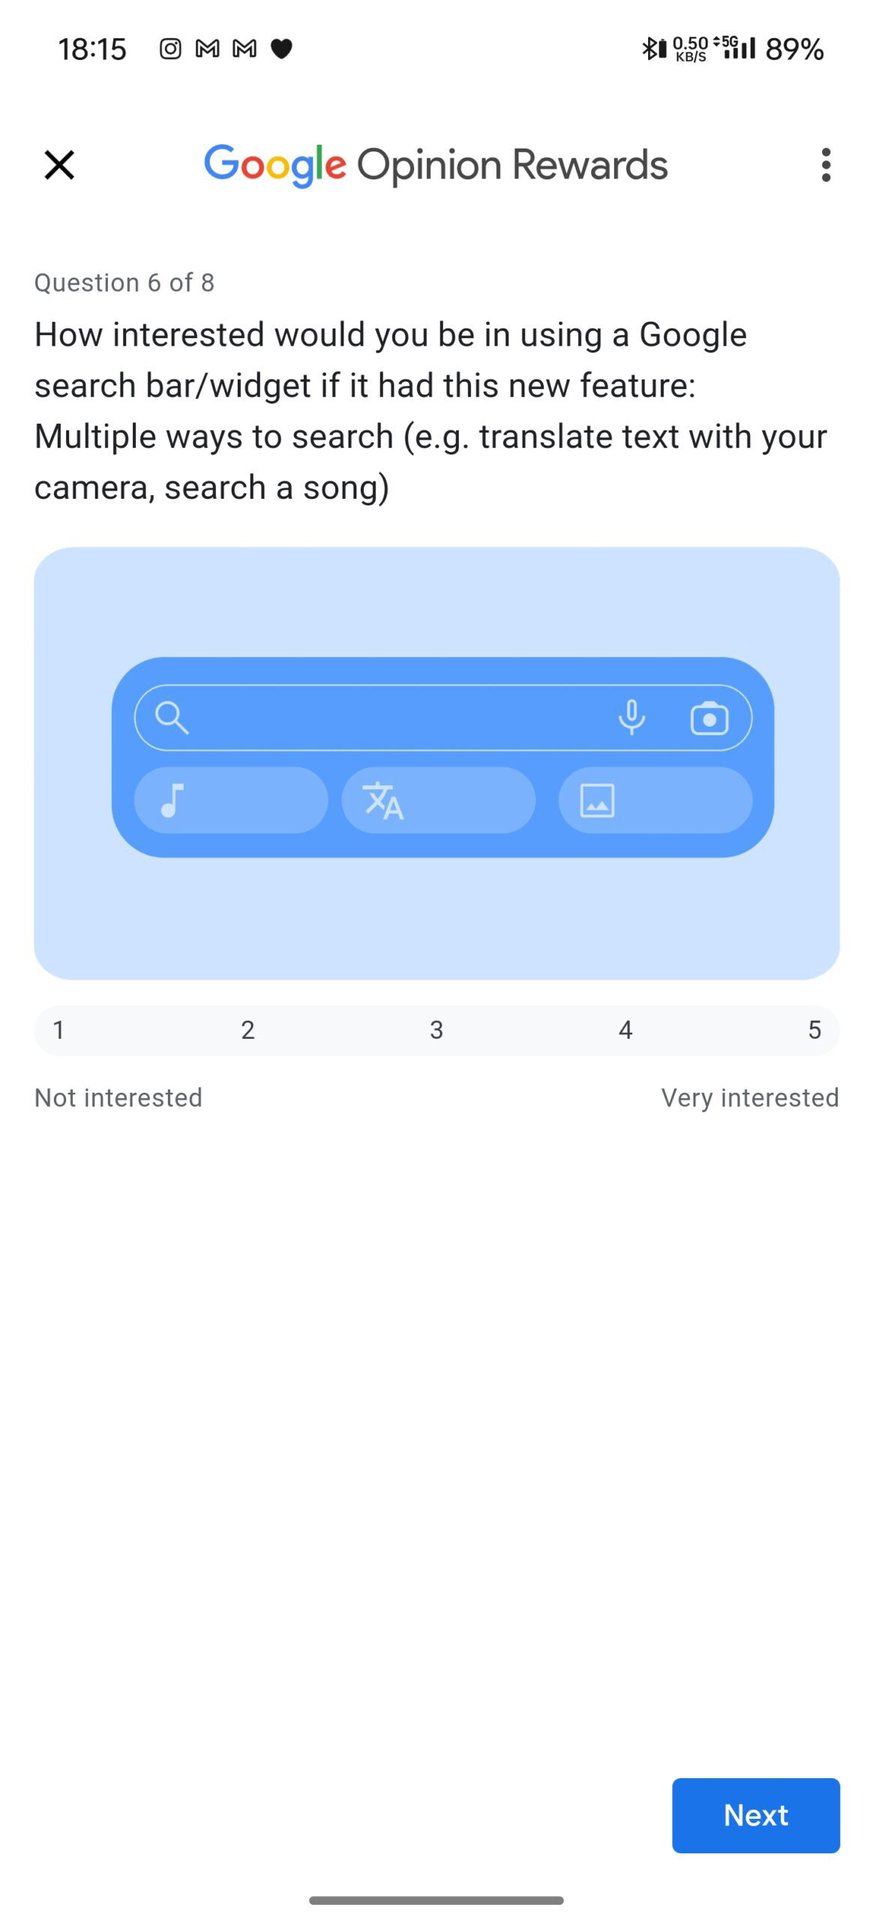 Google Opinion Rewards survery Google Search Home screen widget (2)